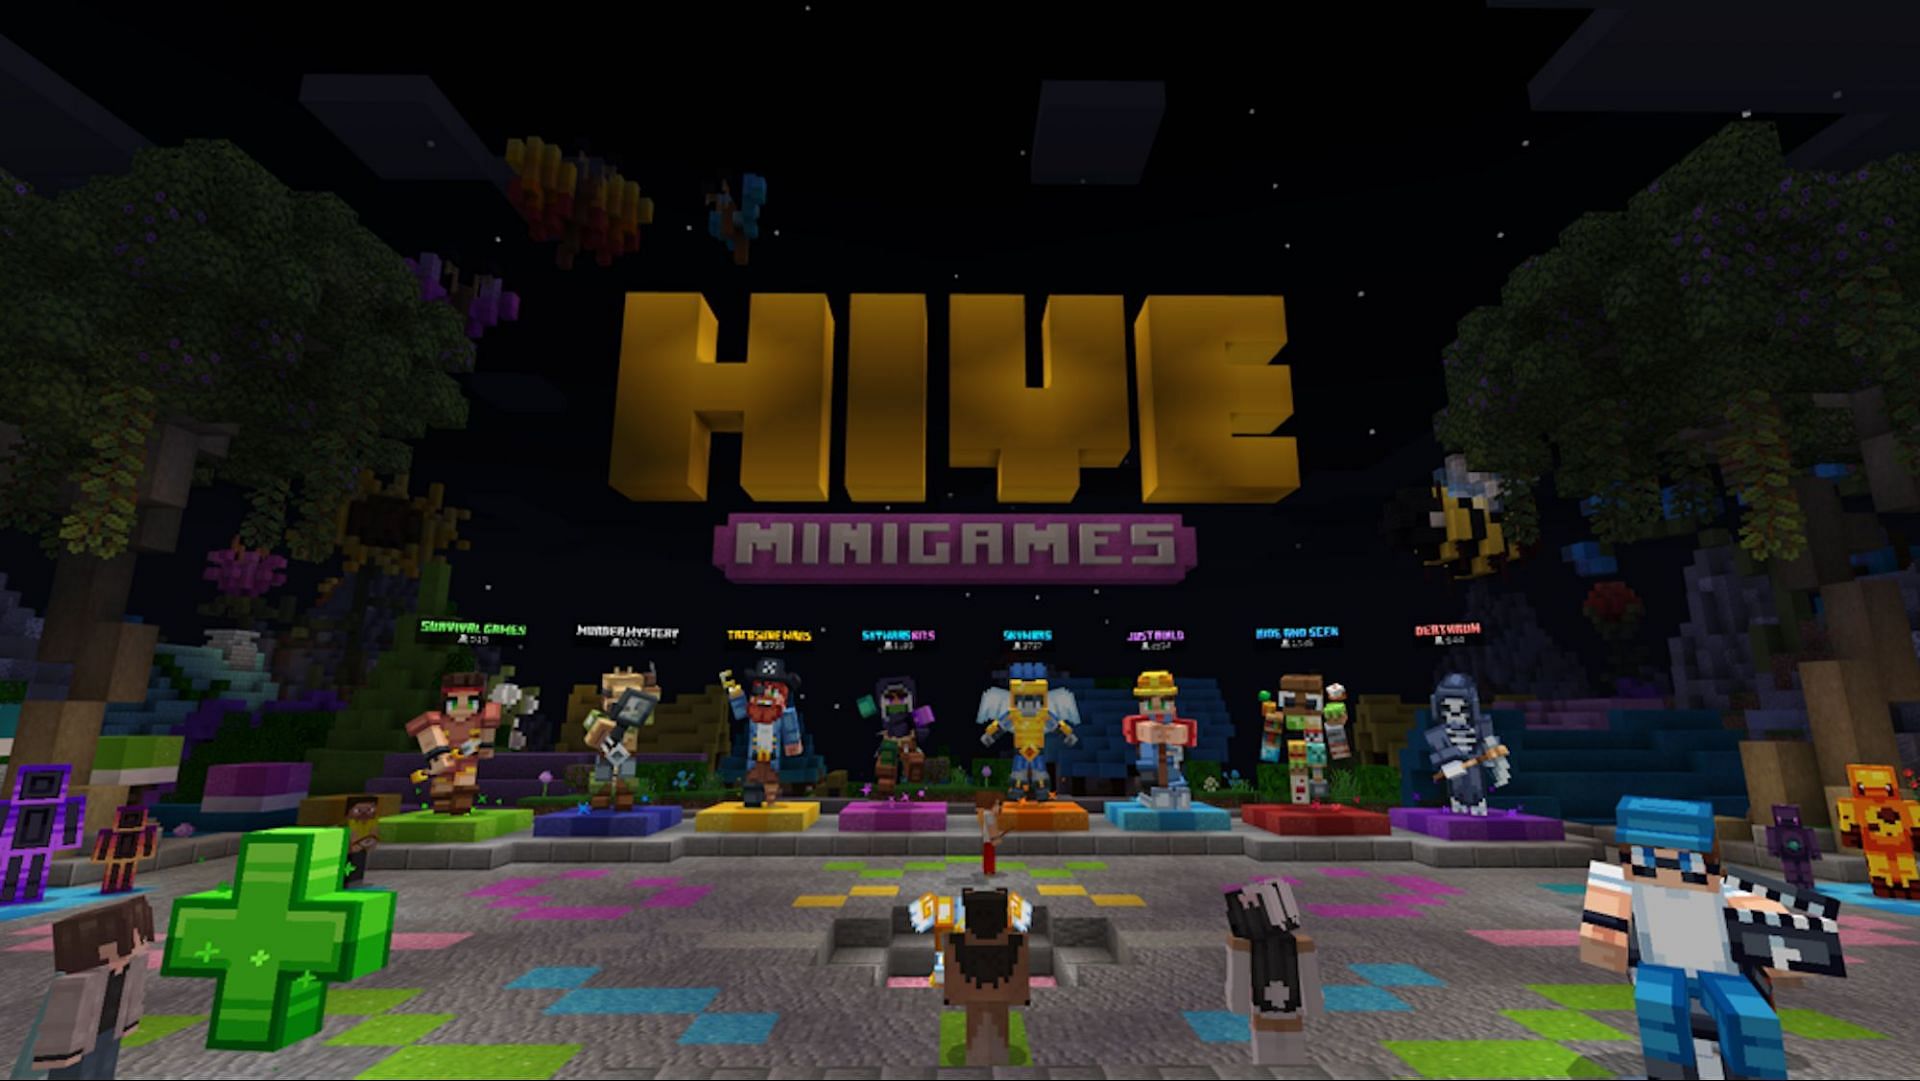 The Hive [Image via Minecraft]